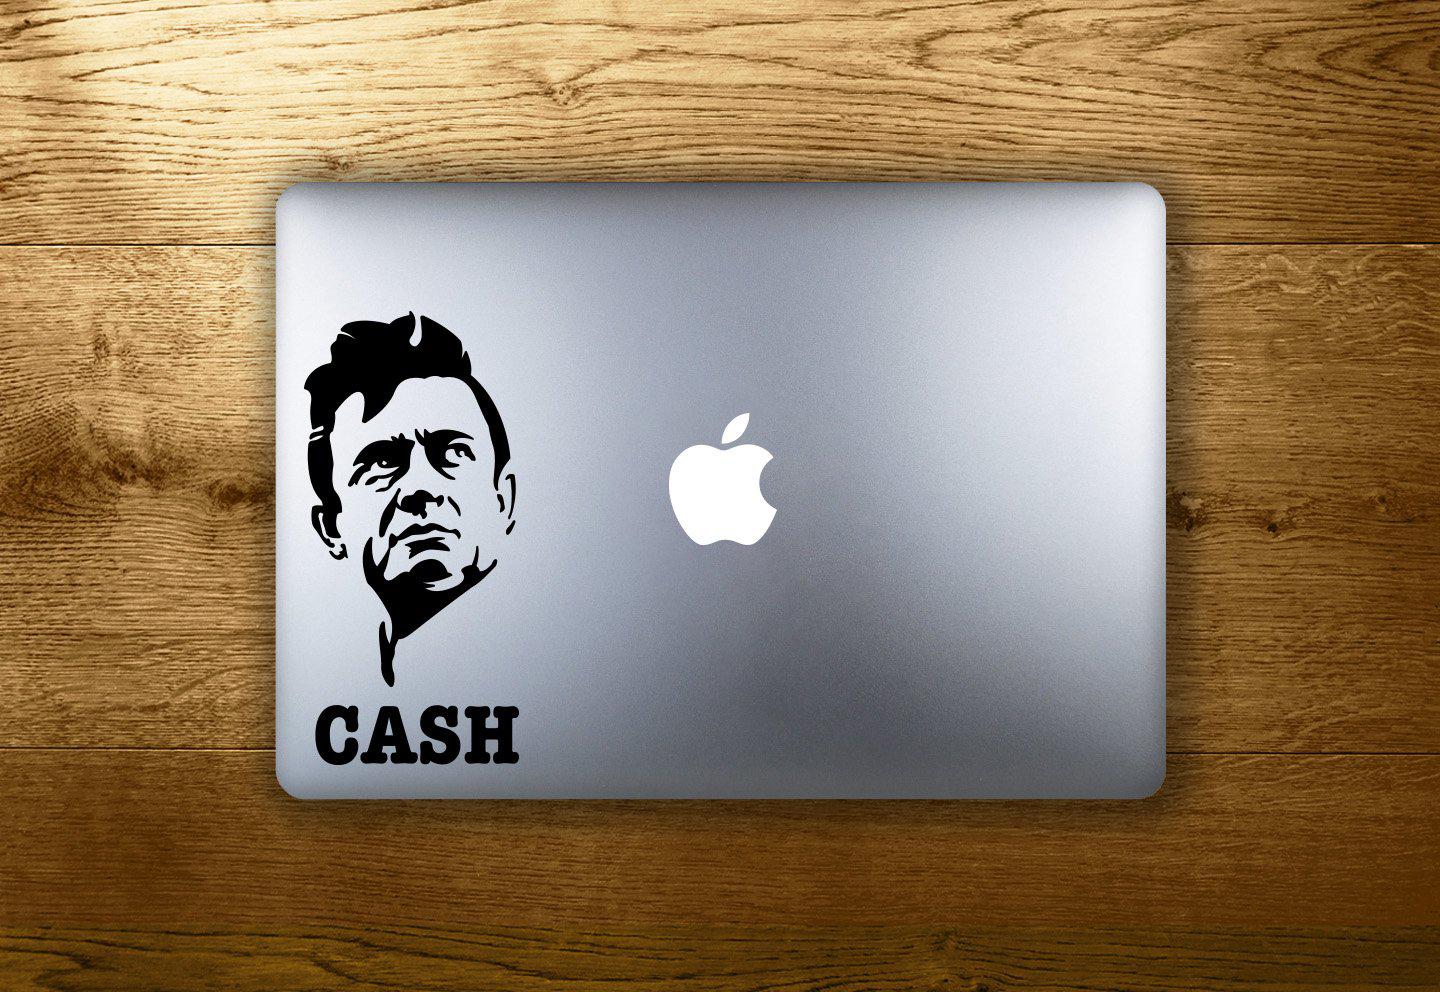 Johnny Cash - make it stick